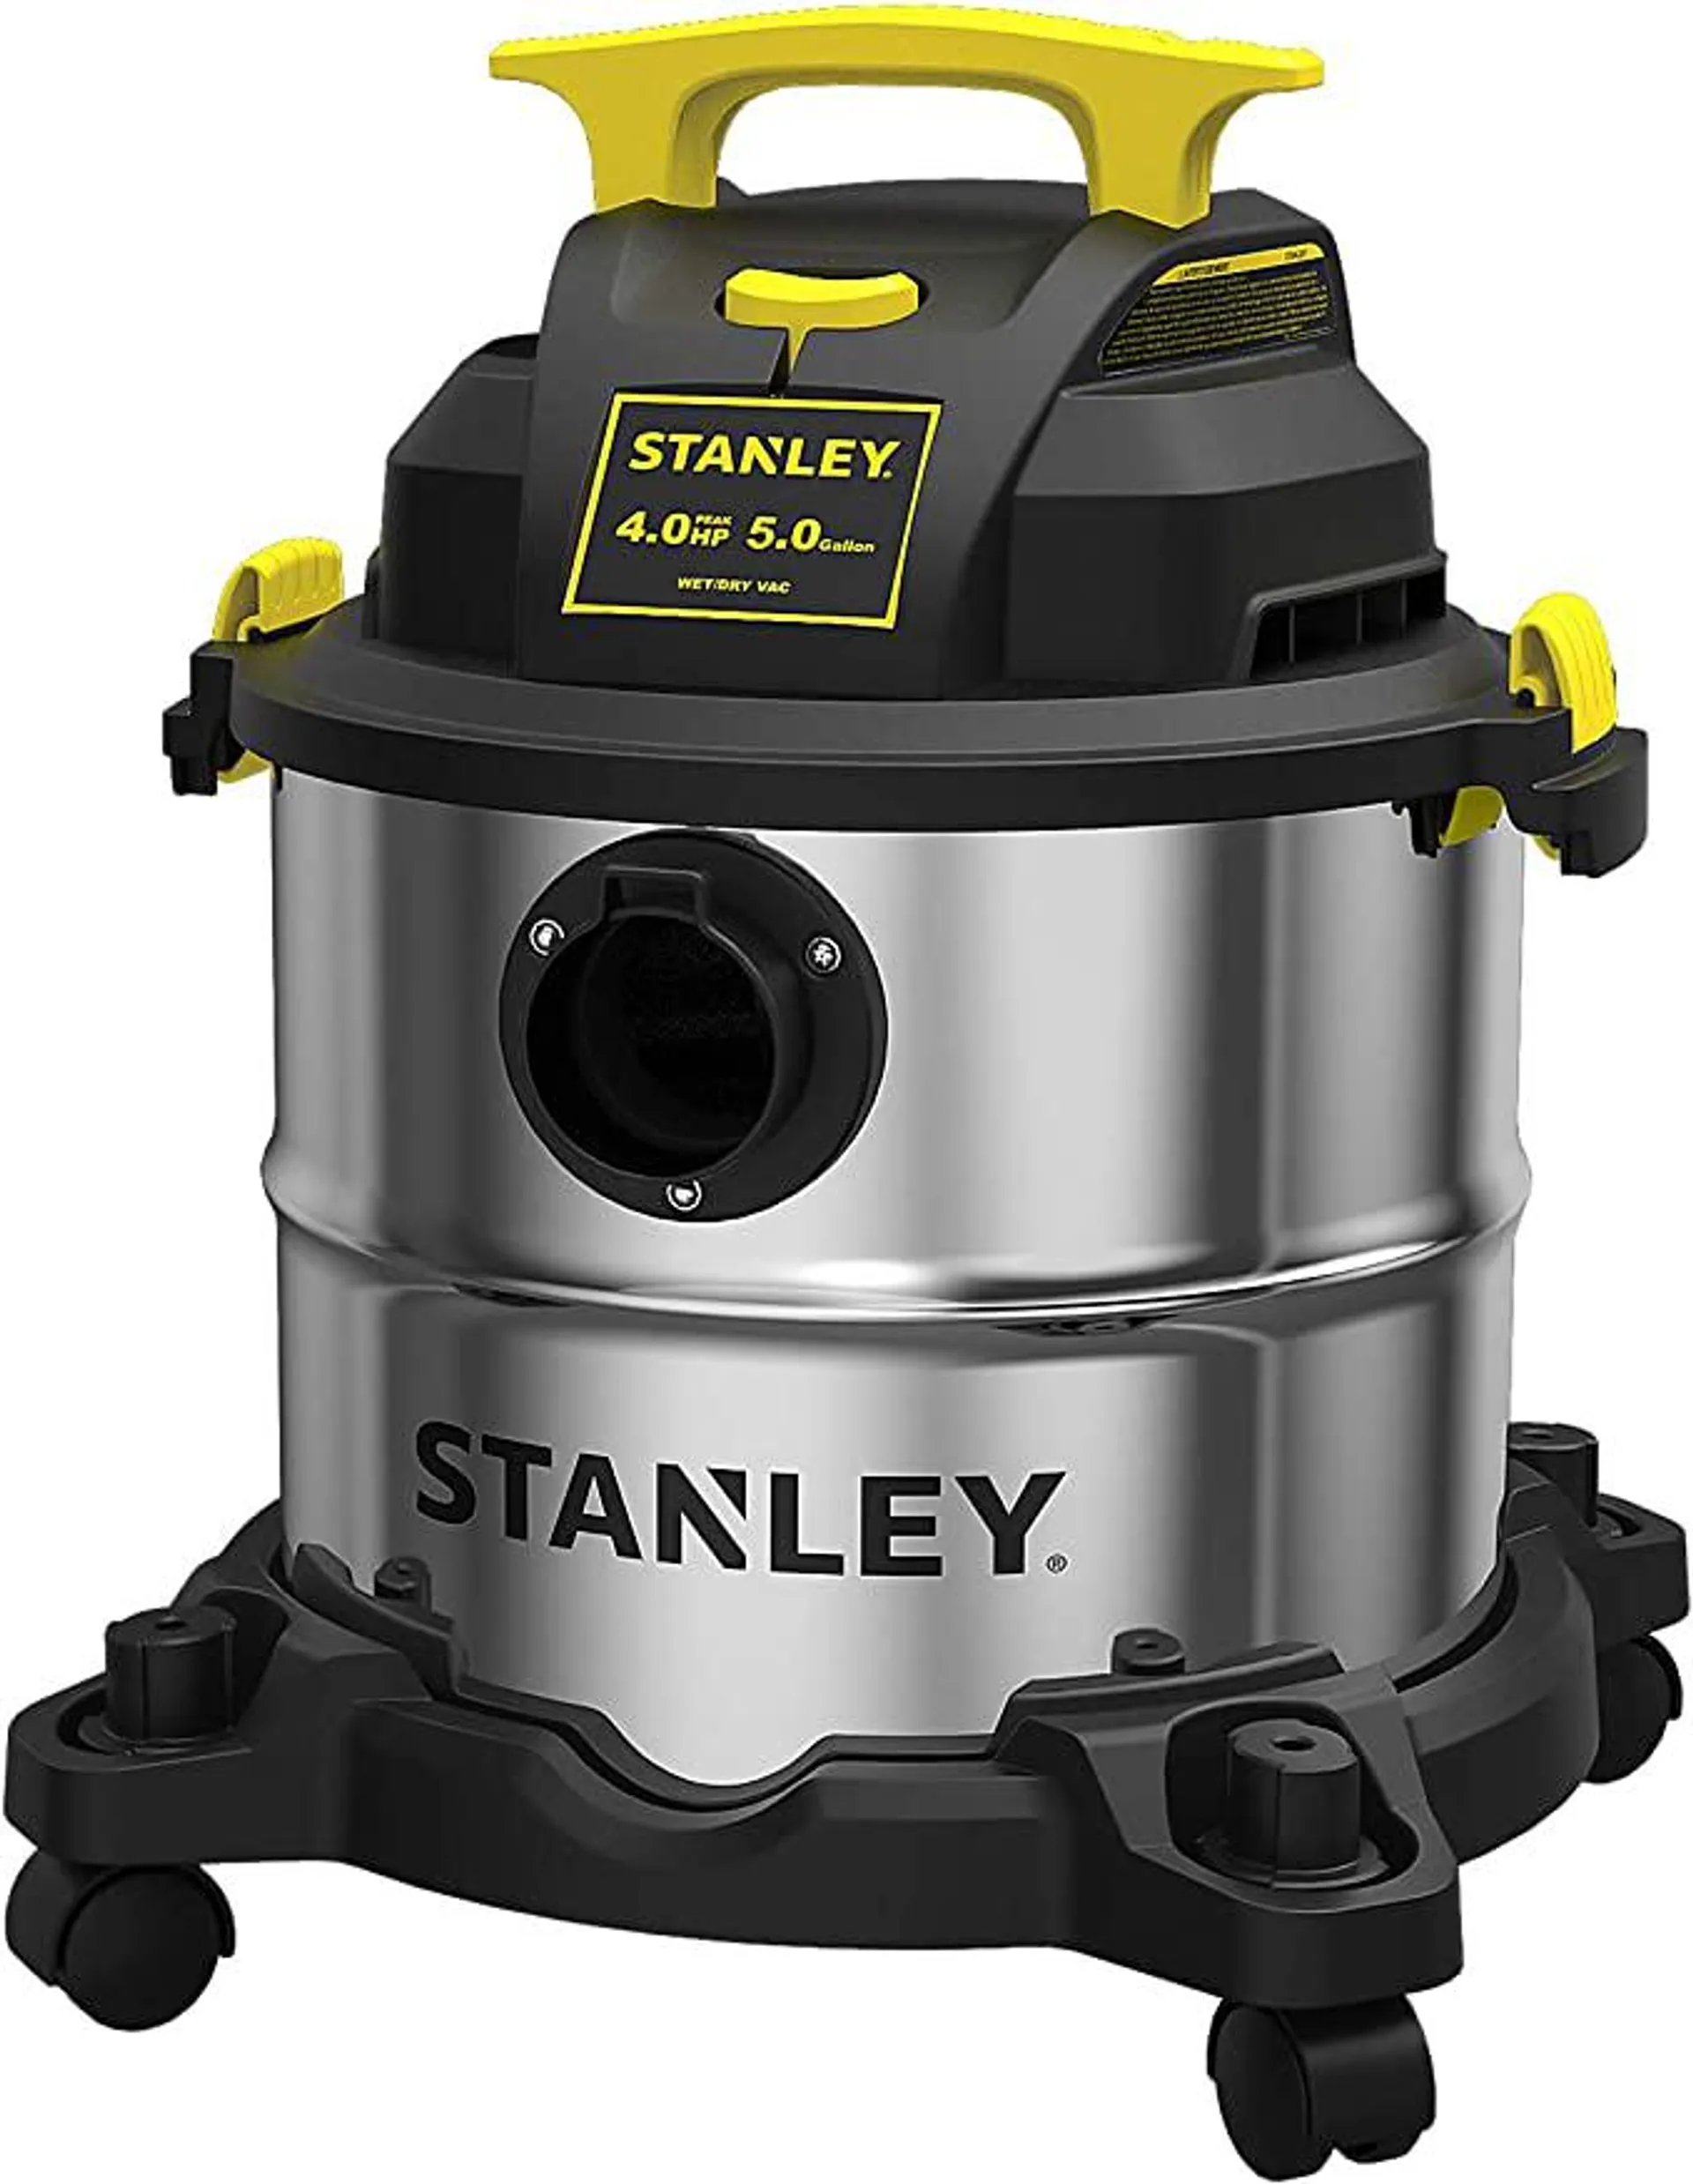 Stanley SL18115 Wet/Dry Vacuum, 5 Gallon, 4 Horsepower, Stainless Steel Tank, 4.0 HP, 50" Sealed Pressure, Silver+Yellow